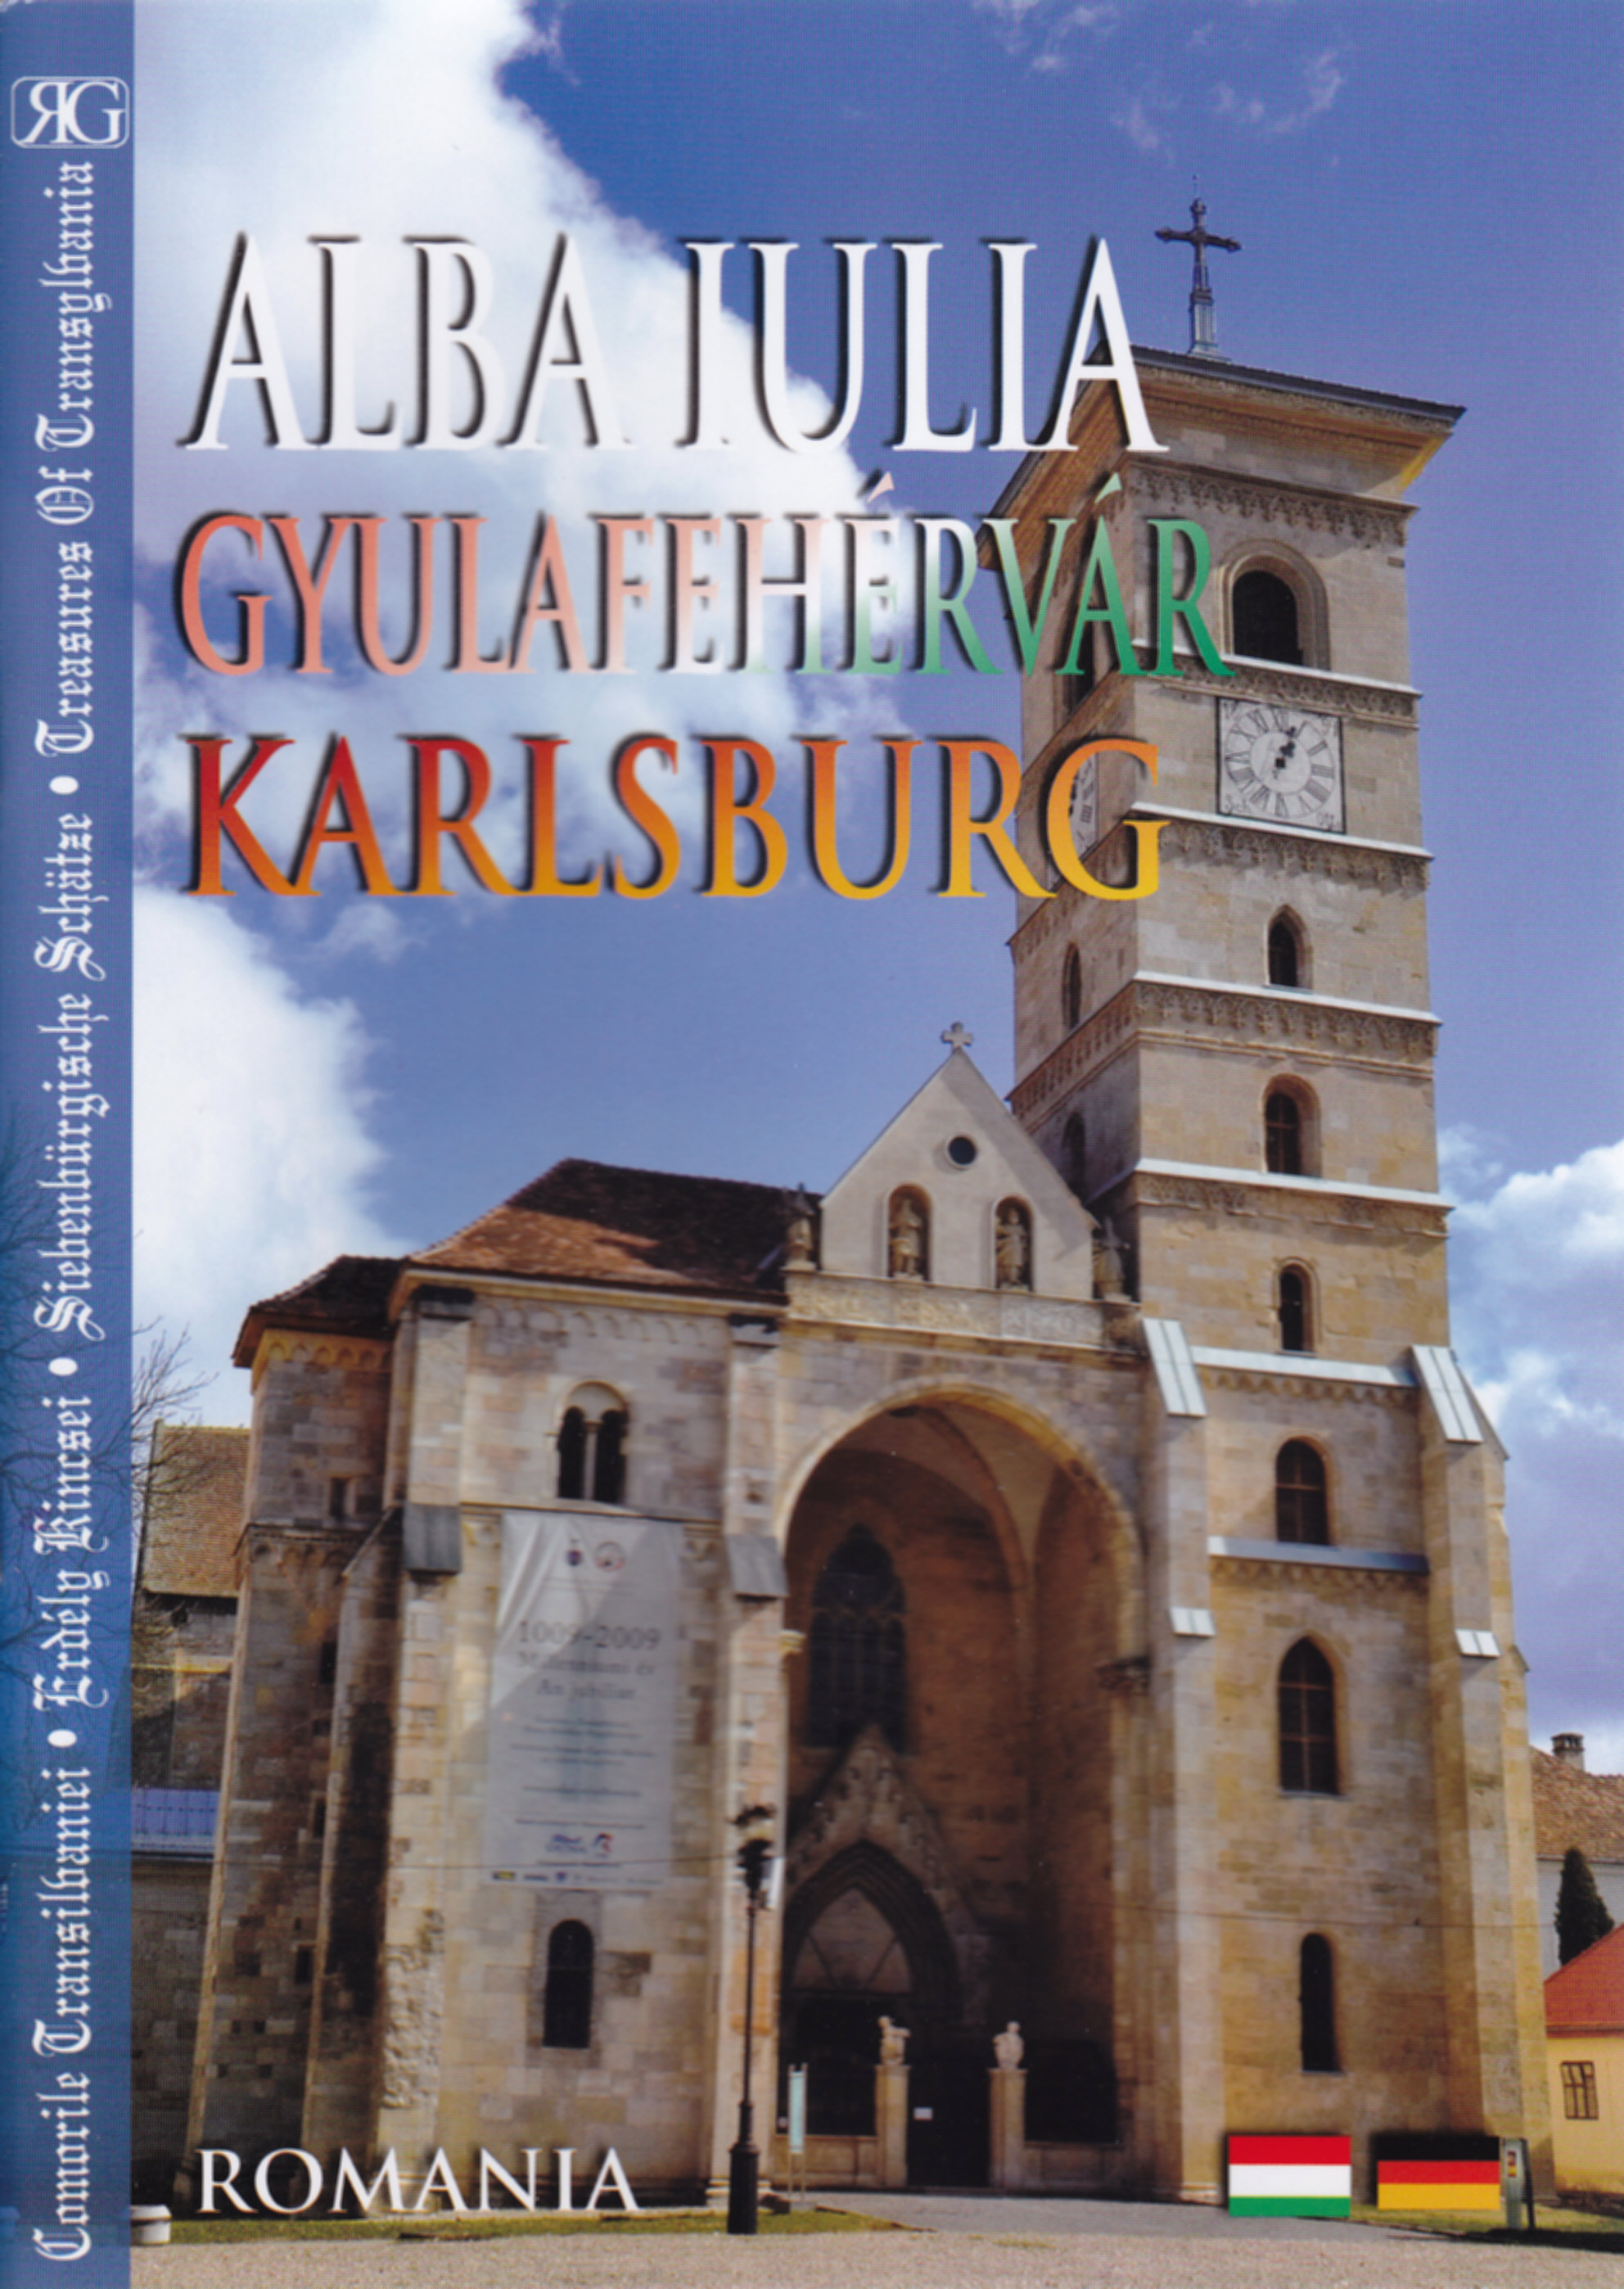 Alba Iulia - germana, maghiara - Romghid